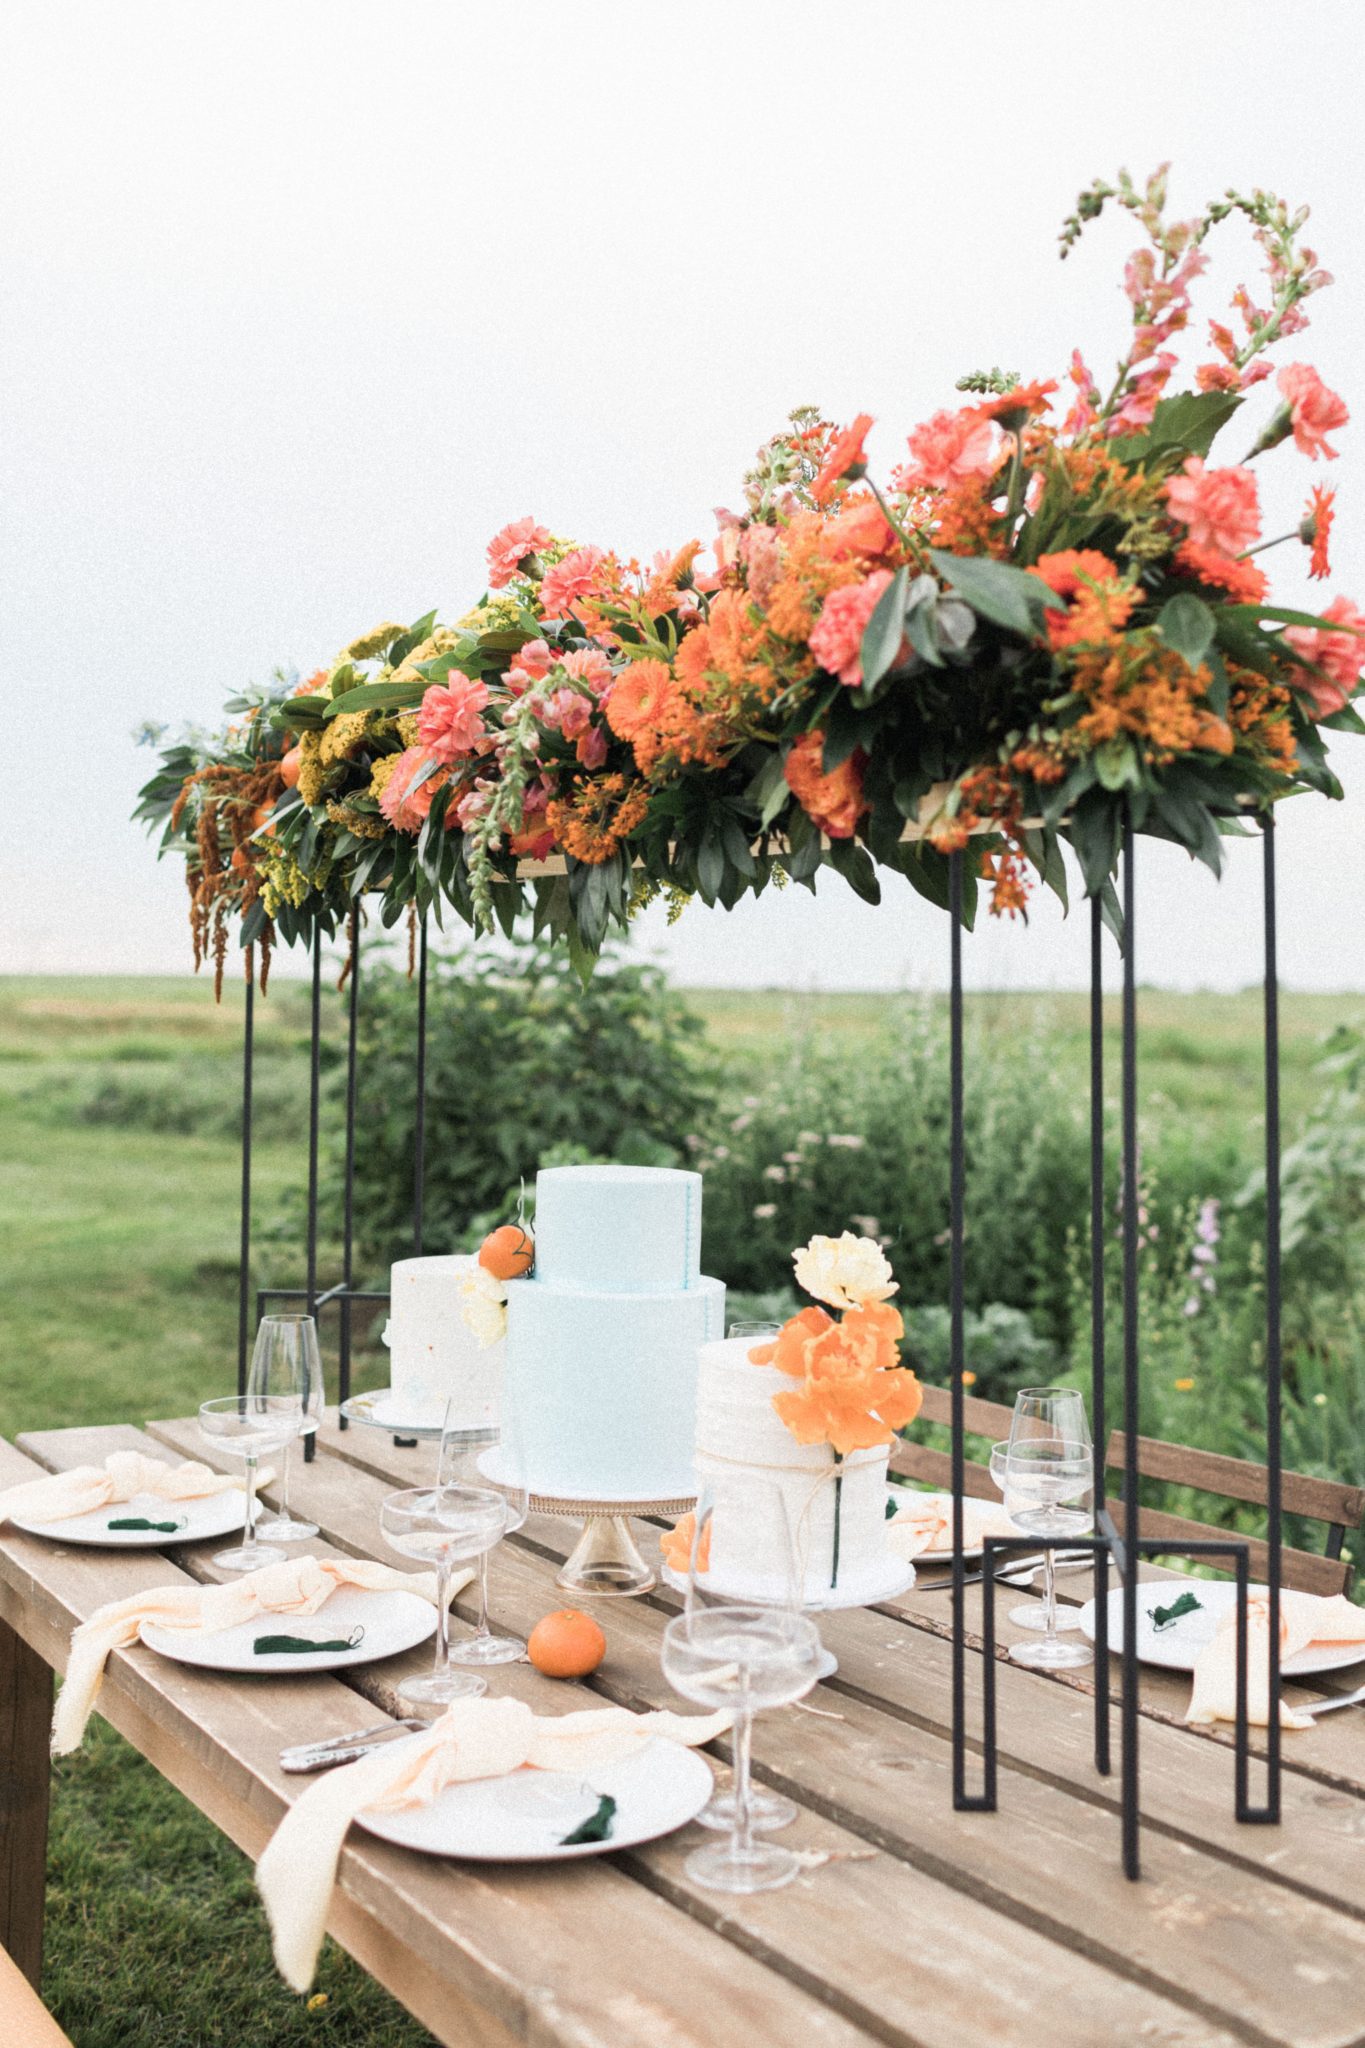 Floral arch and robin blue wedding cake on a farm table for a countryside garden wedding